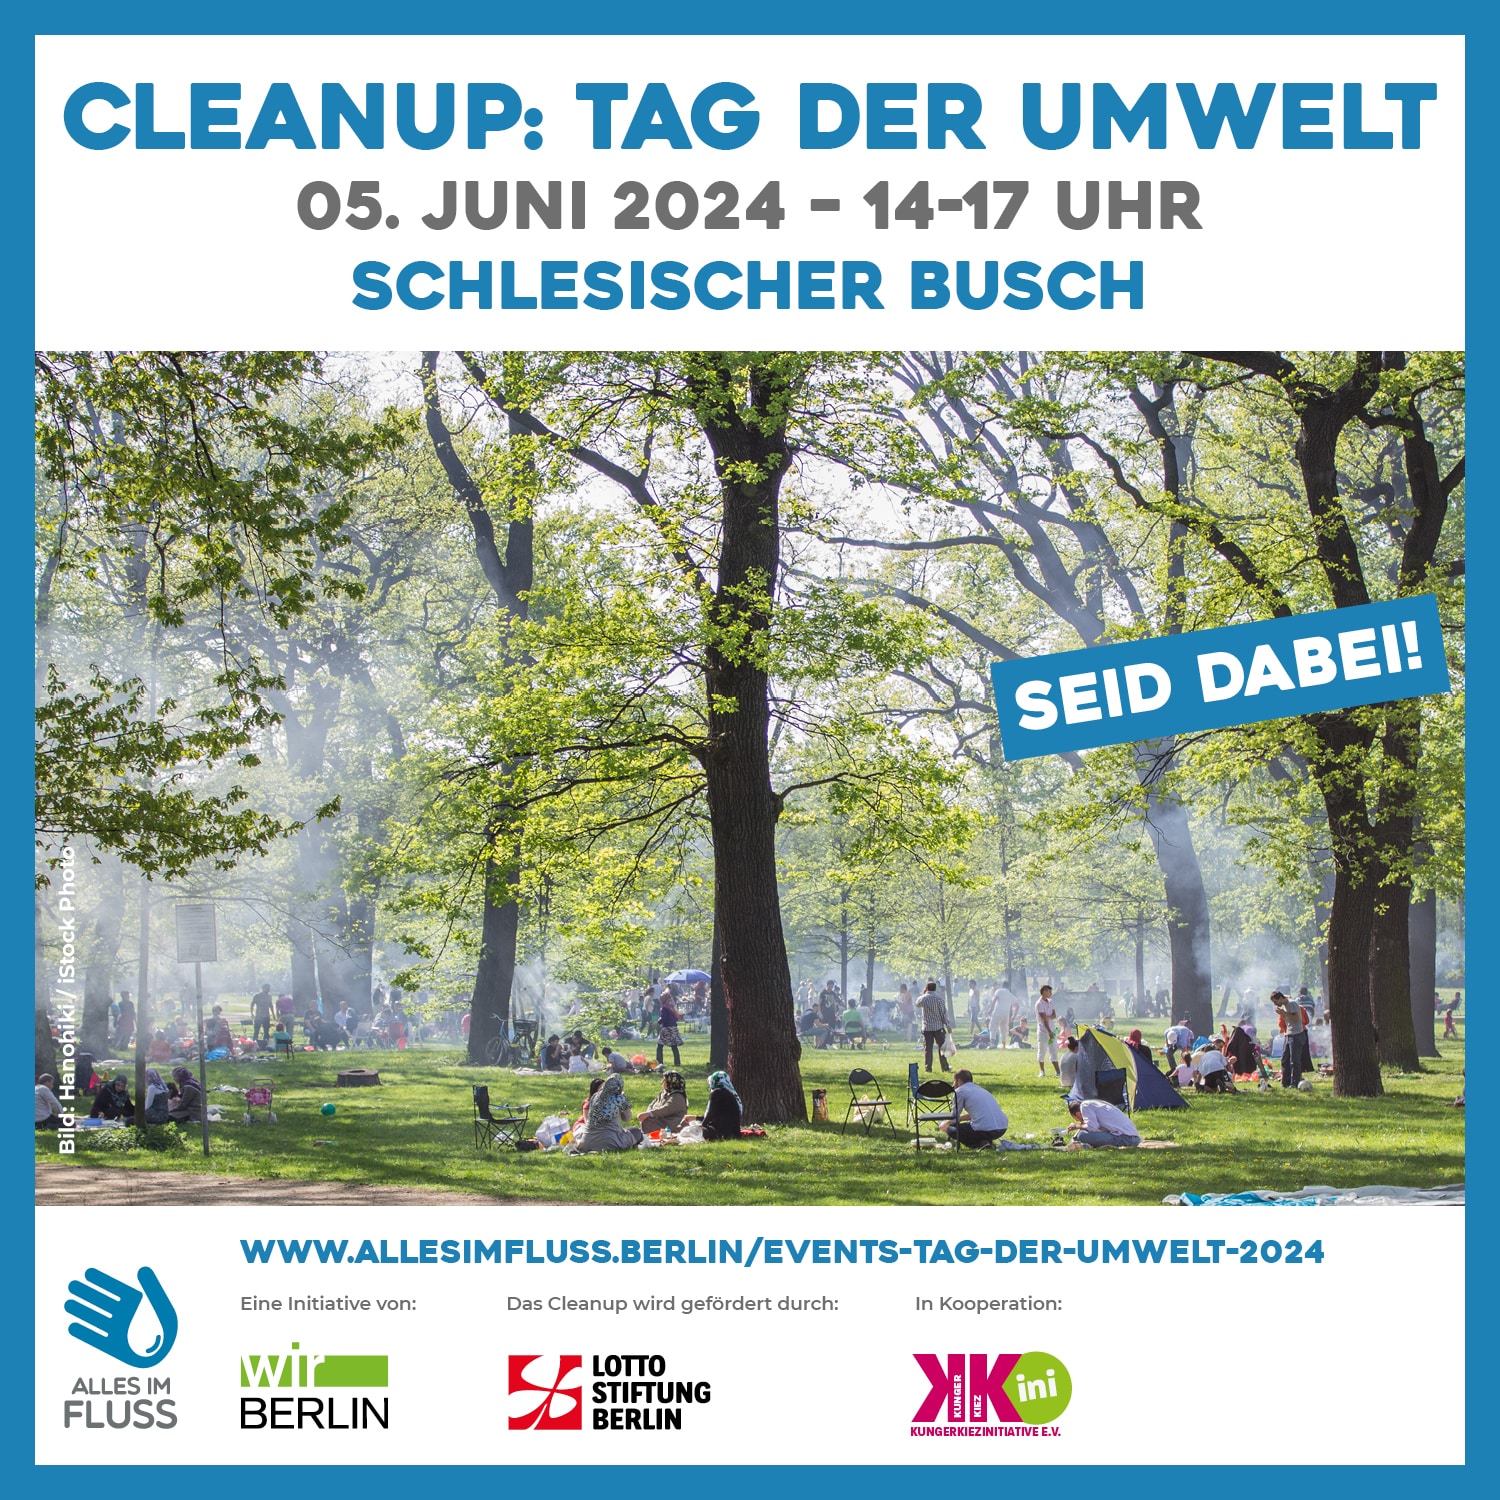 240506_AIF_Cleanup_TagderUmwelt